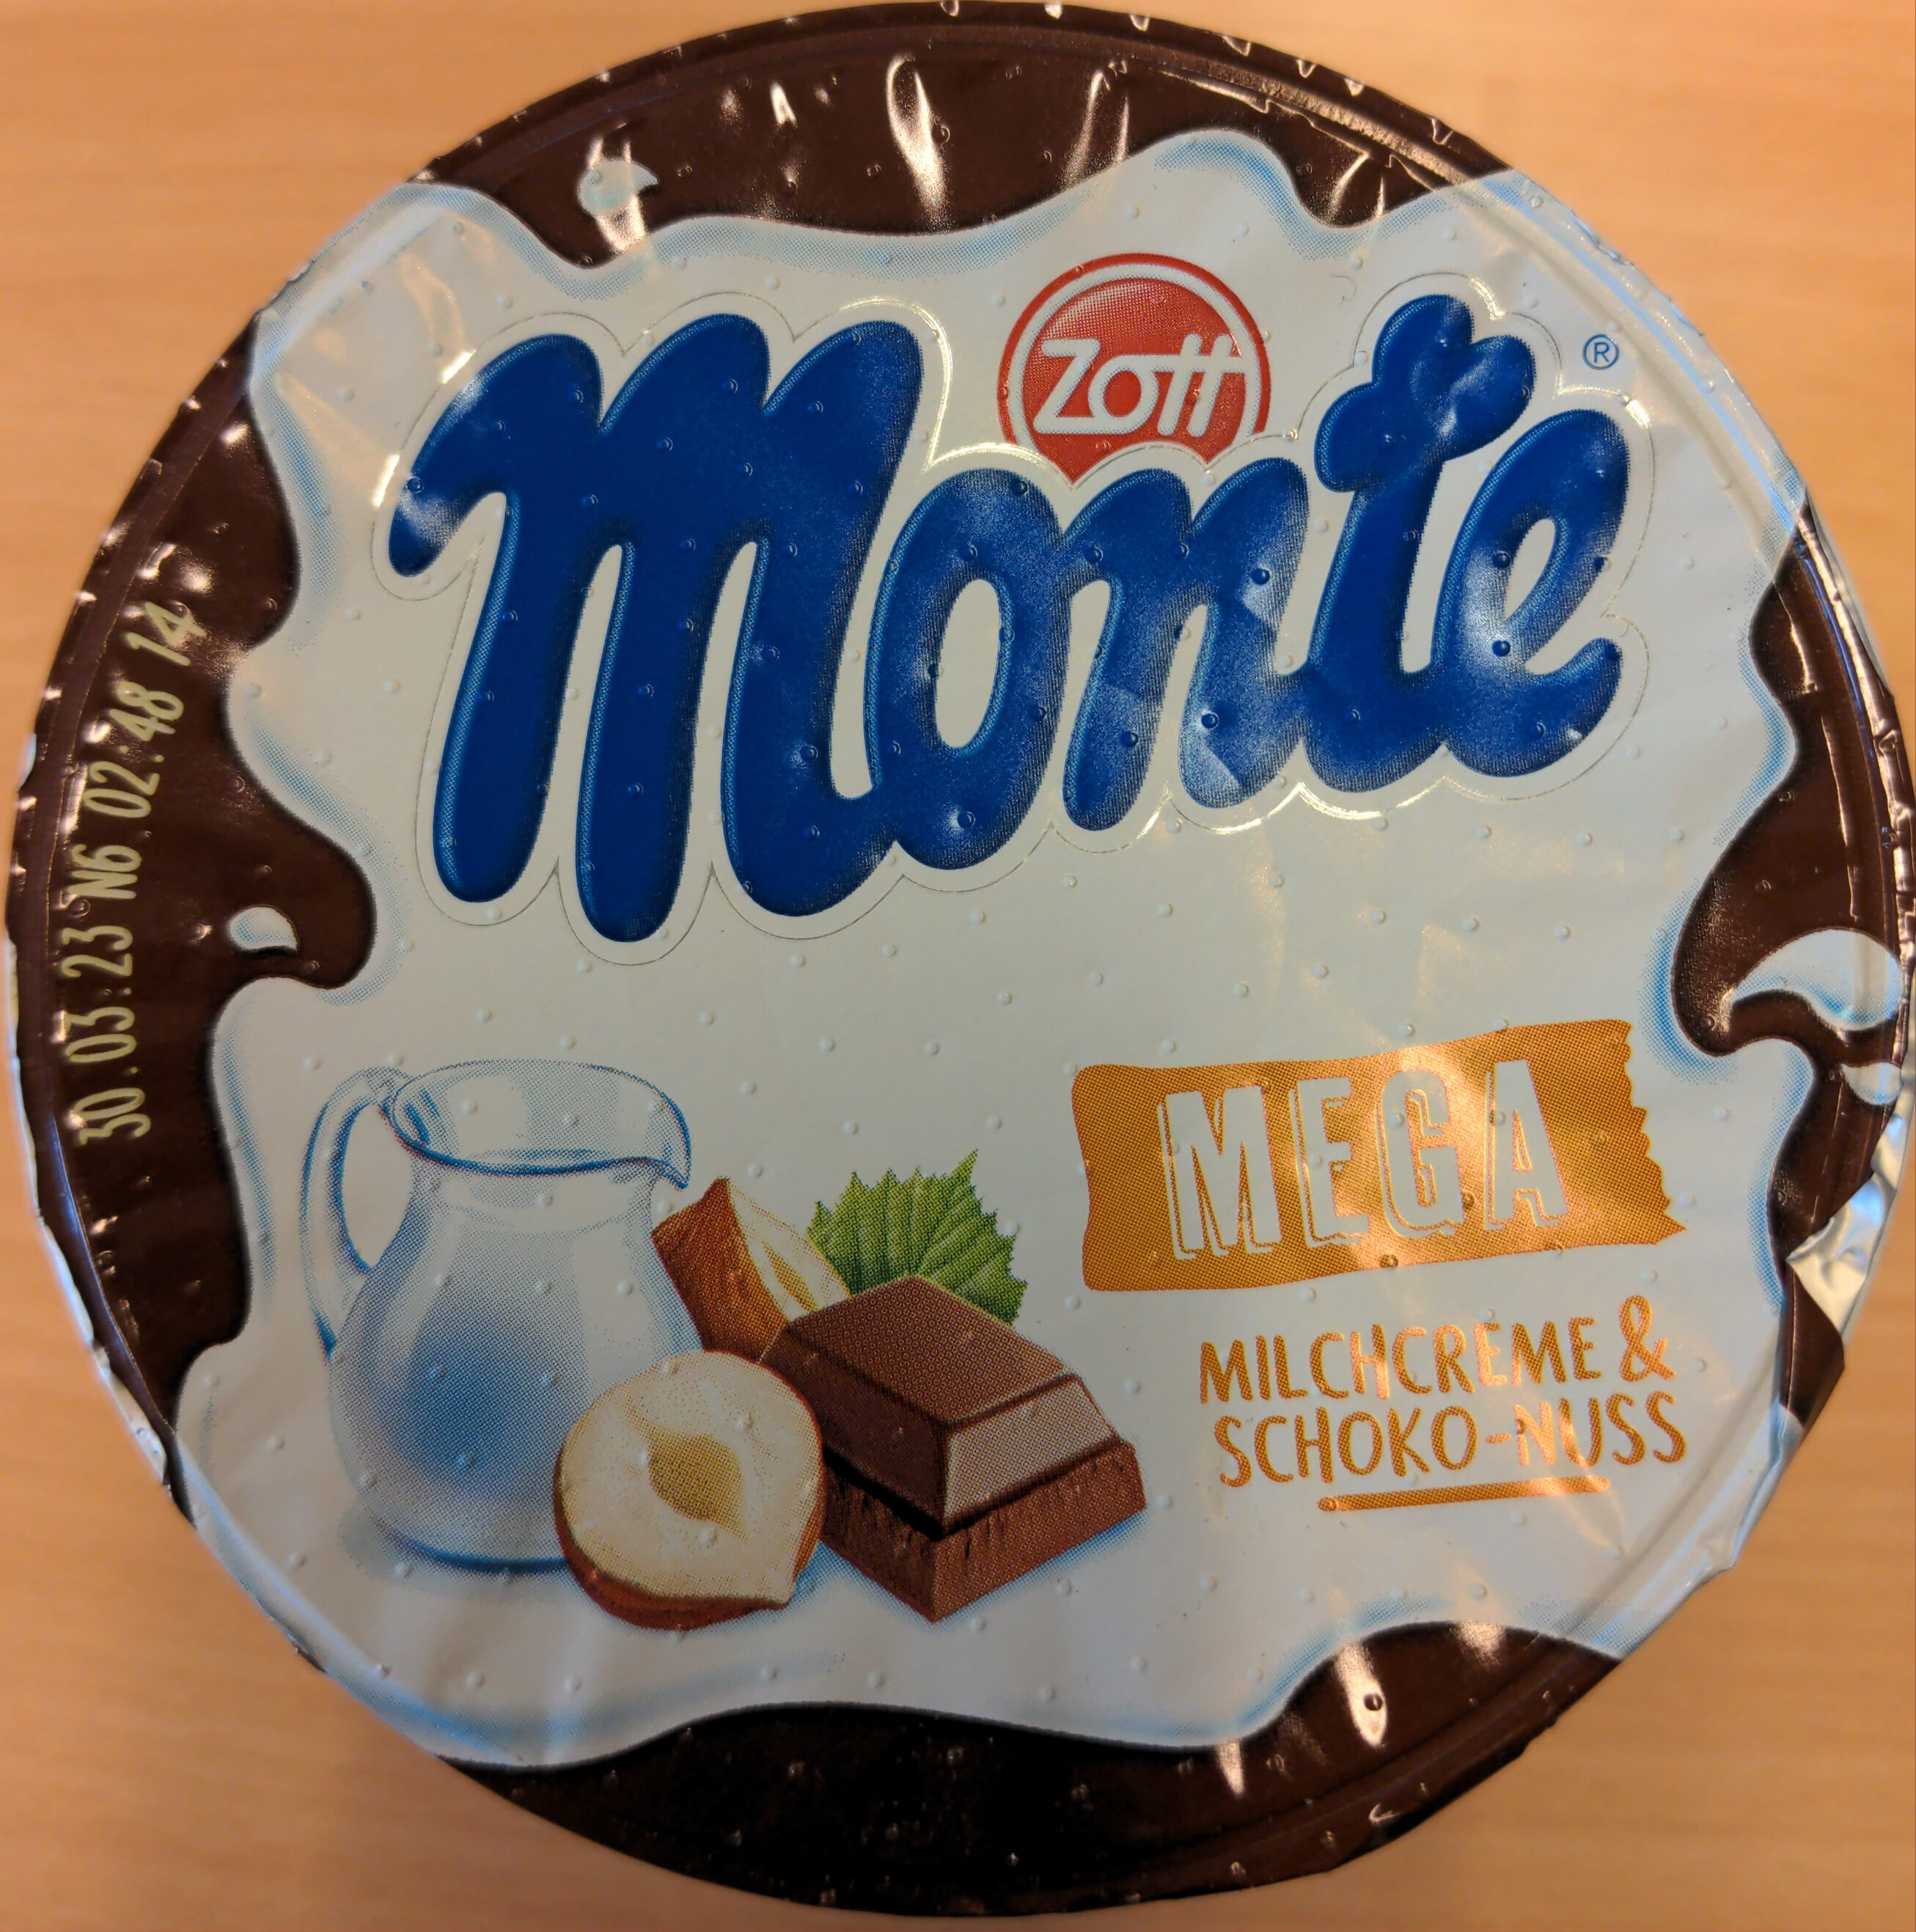 Monte Mega Milchcreme & Schoko-Nuss - Product - de